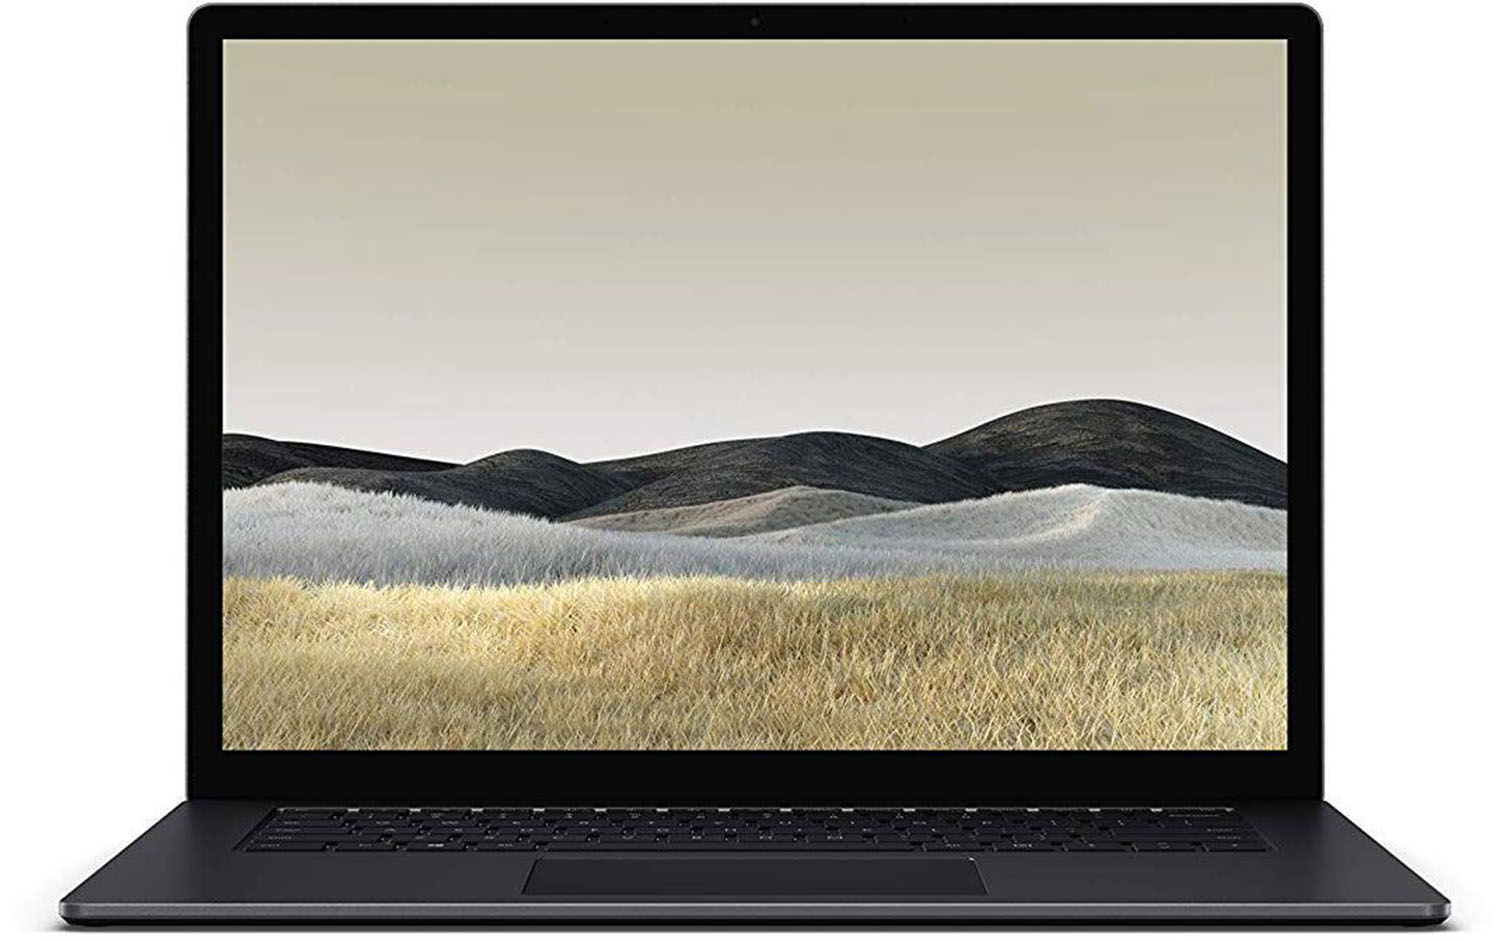 Microsoft Surface Laptop 3 Intel Core i7 10th Gen 16GB RAM 256GB SSD Touchscreen Windows 10 Home